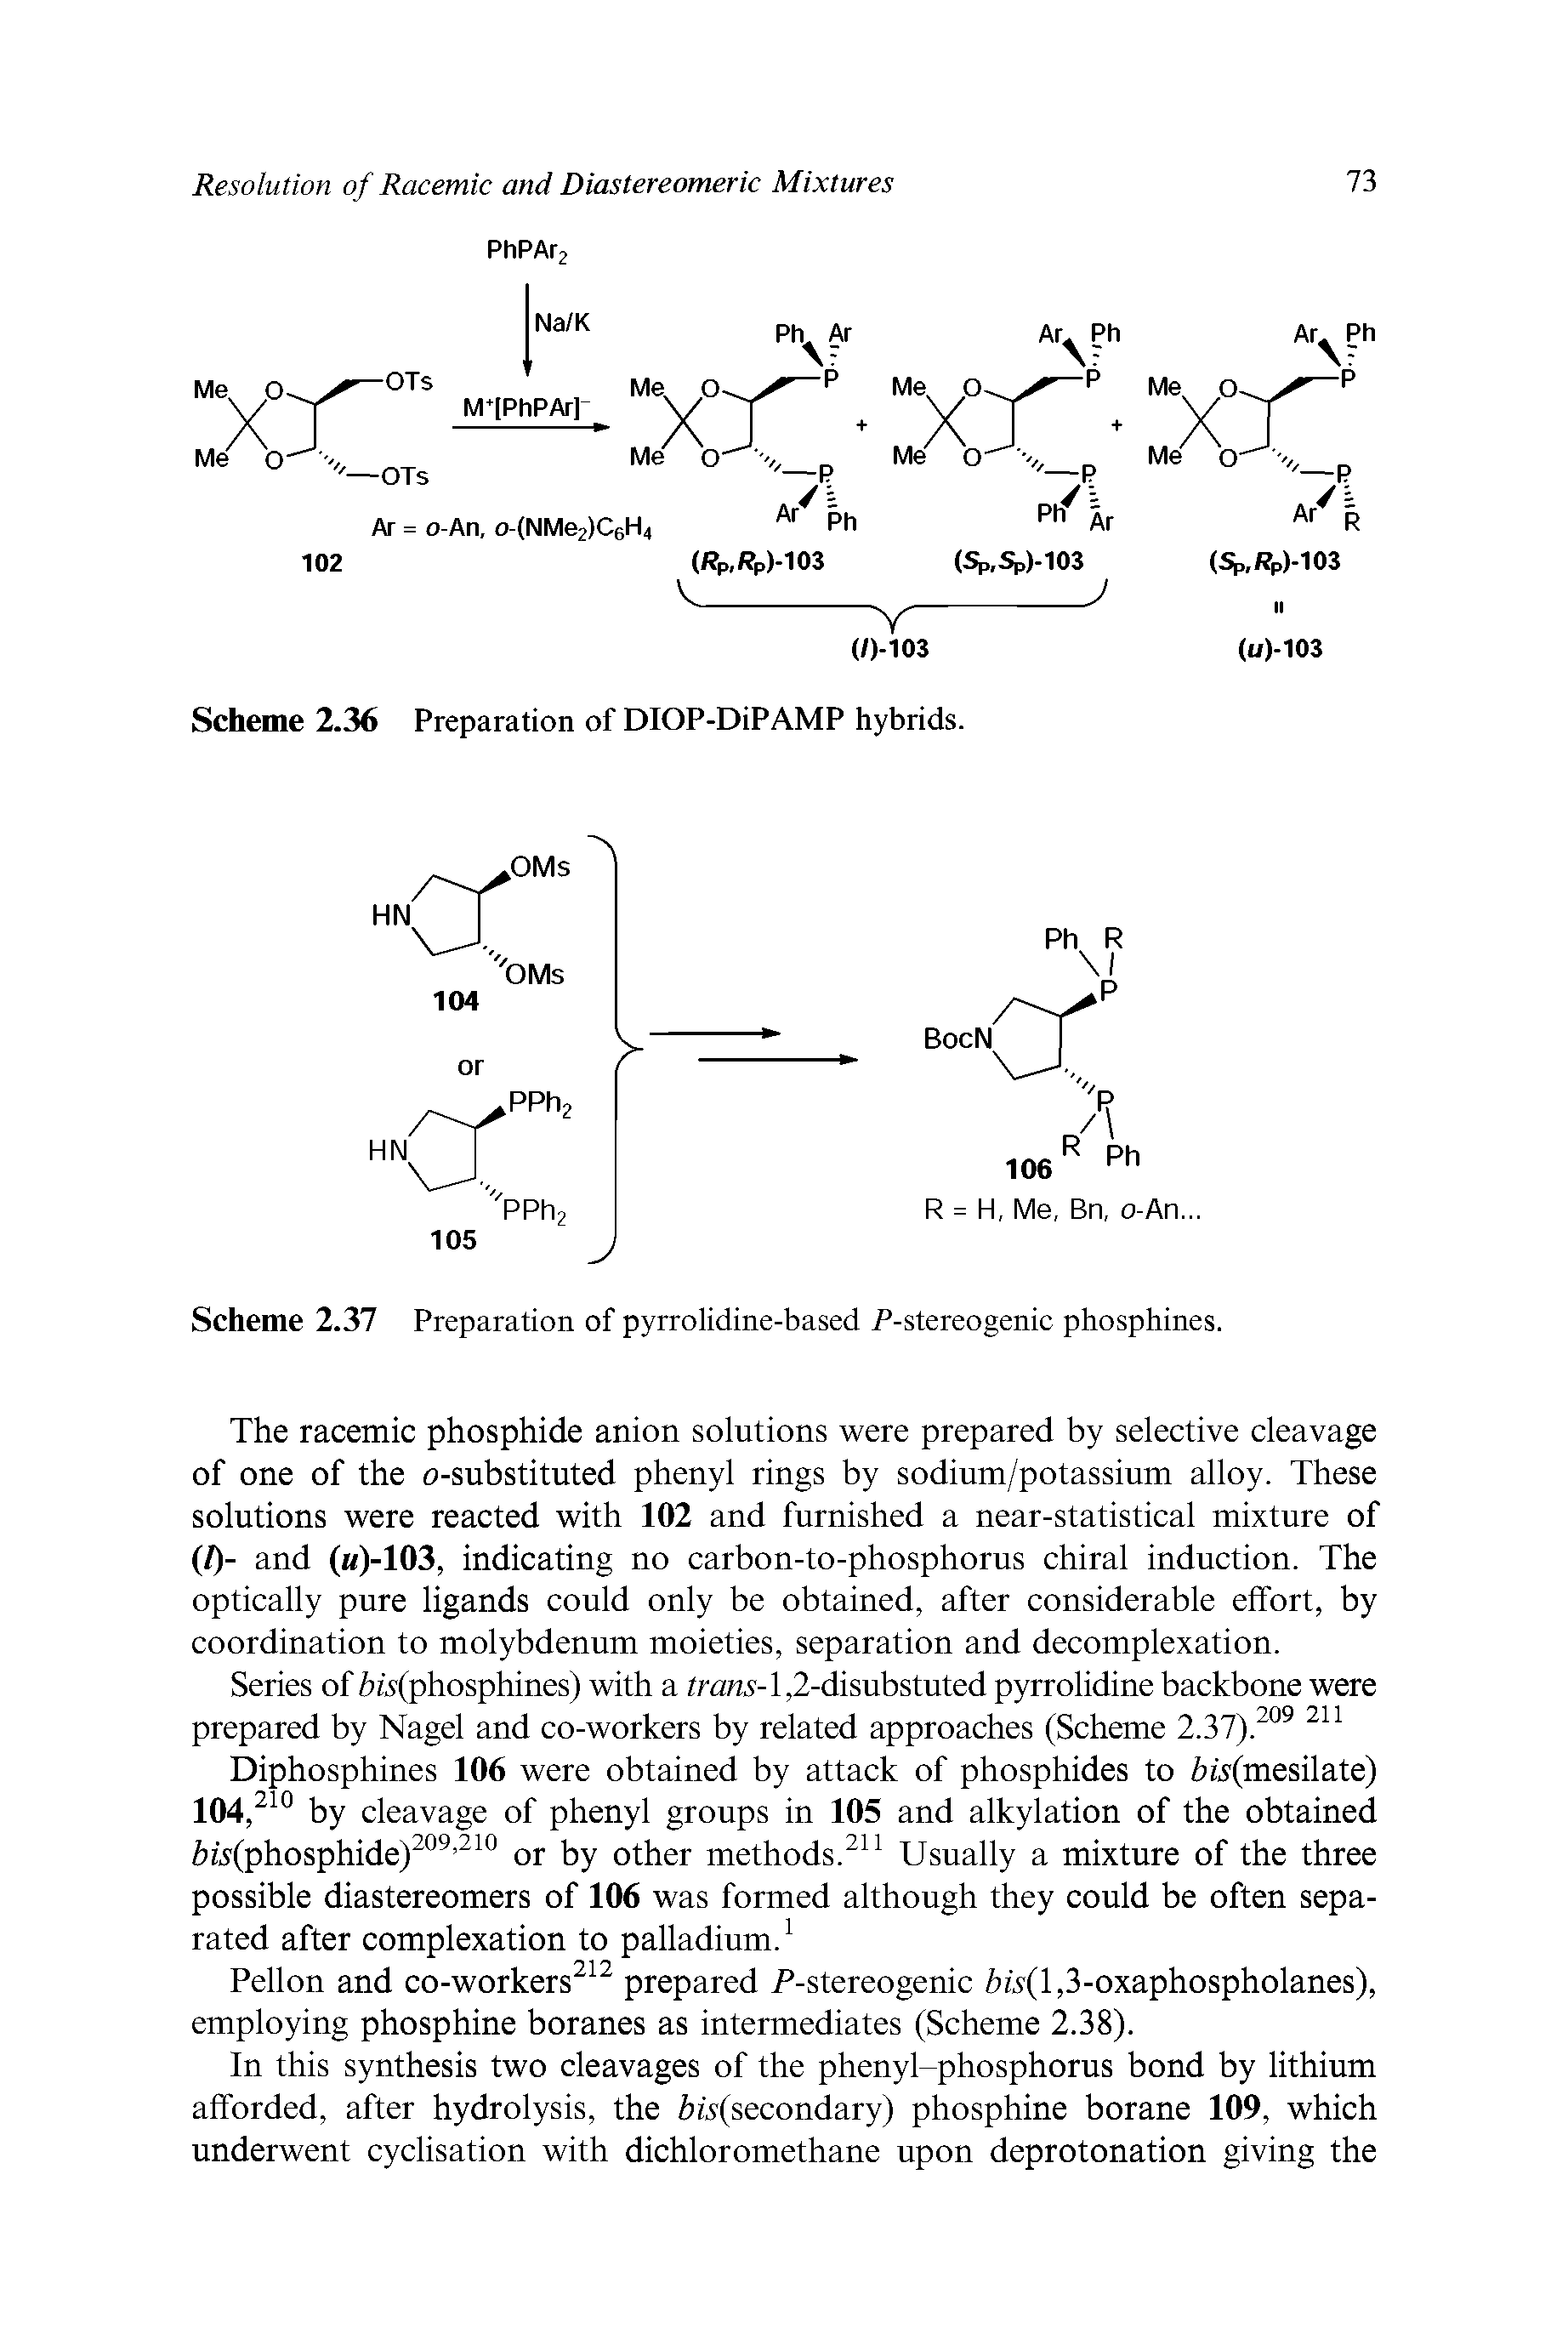 Scheme 2.37 Preparation of pyrrolidine-based P-stereogenic phosphines.